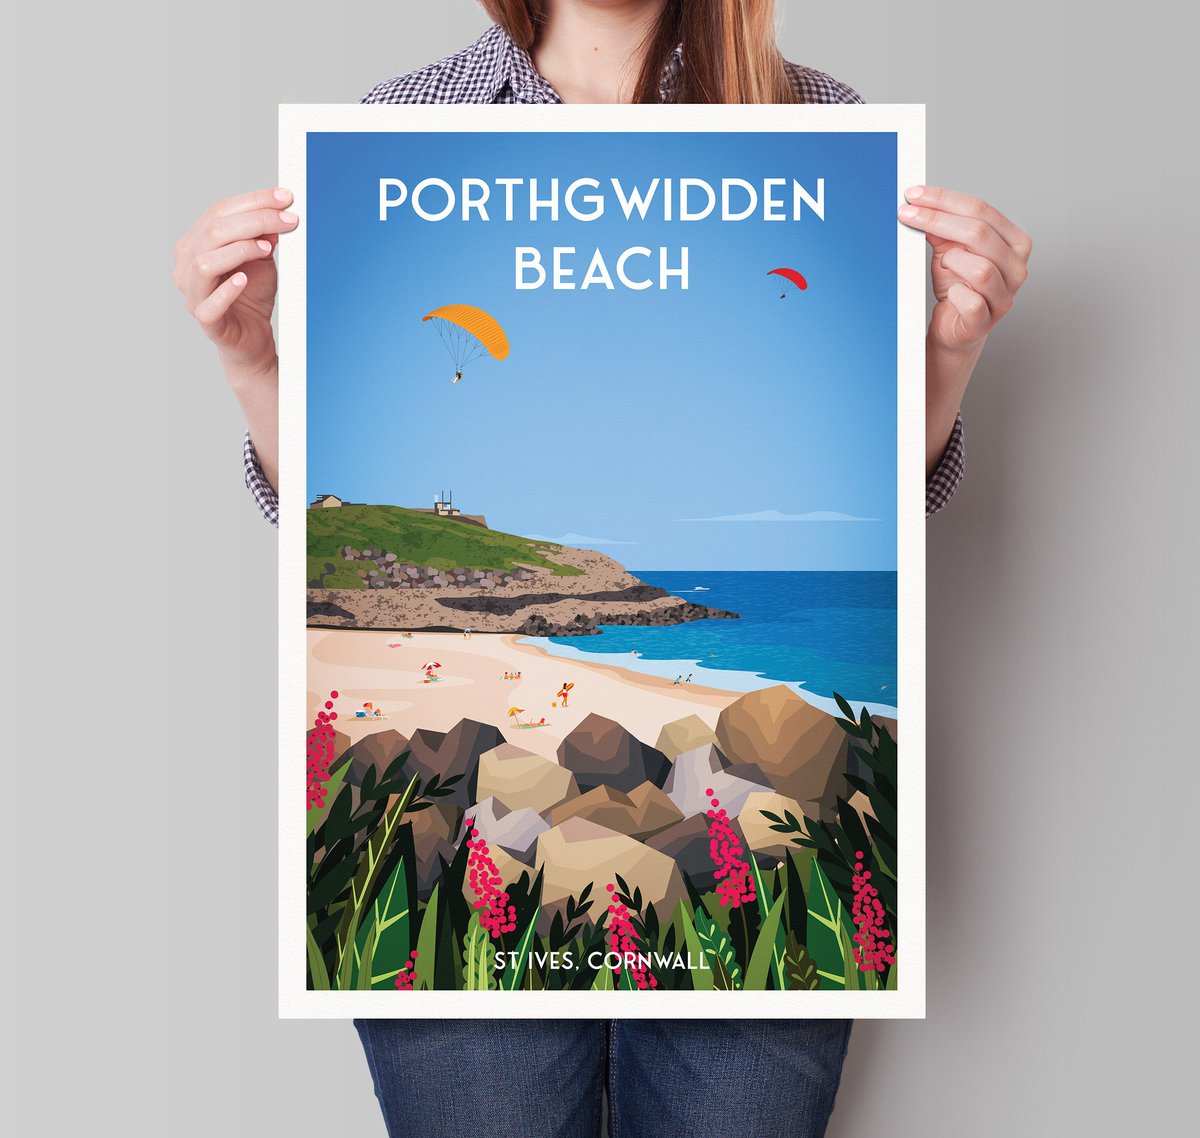 Porthgwidden Beach Print -St Ives - Cornwall - England Travel Poster - Home Decor - Travel Gift etsy.me/3GLGxi9 #porthgwidden #stives #cornwall #cornwallart #porthgwiddenbeach #porthgwidden